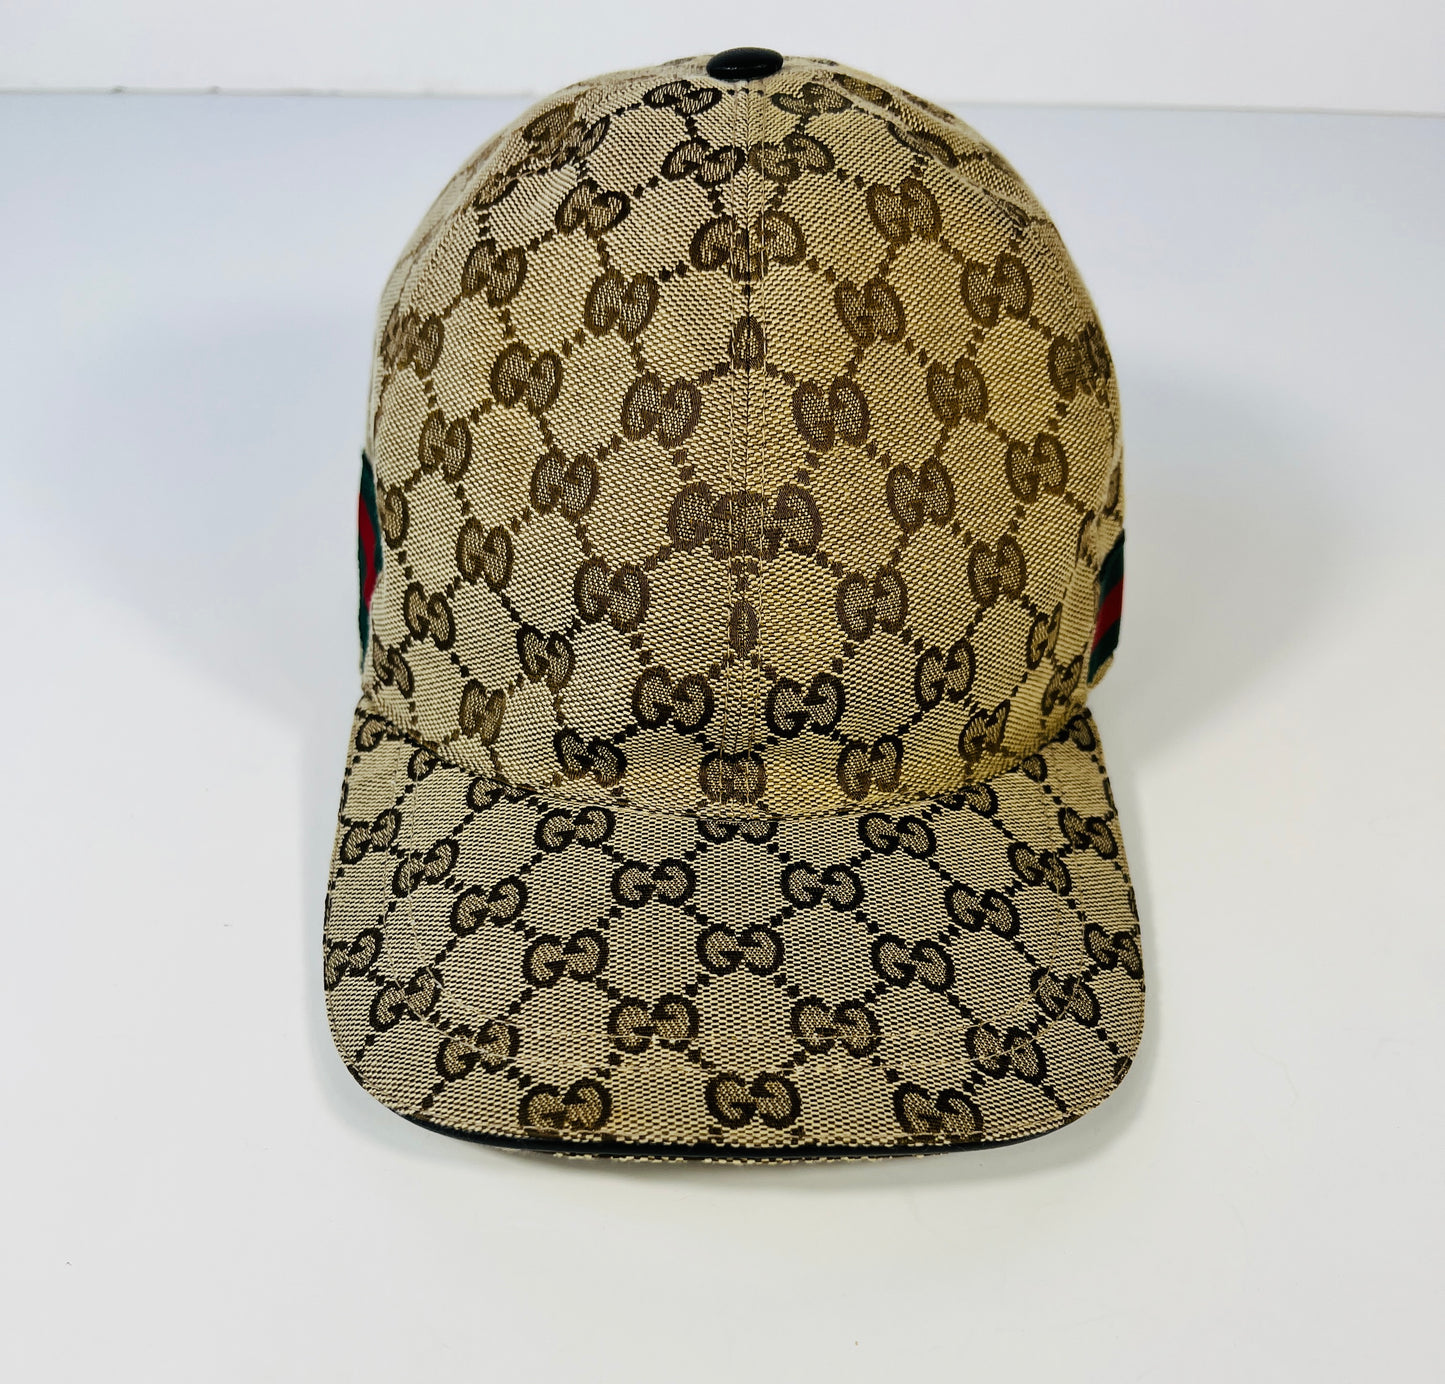 Gucci Original GG Canvas Baseball Hat with Web Beige/Brown